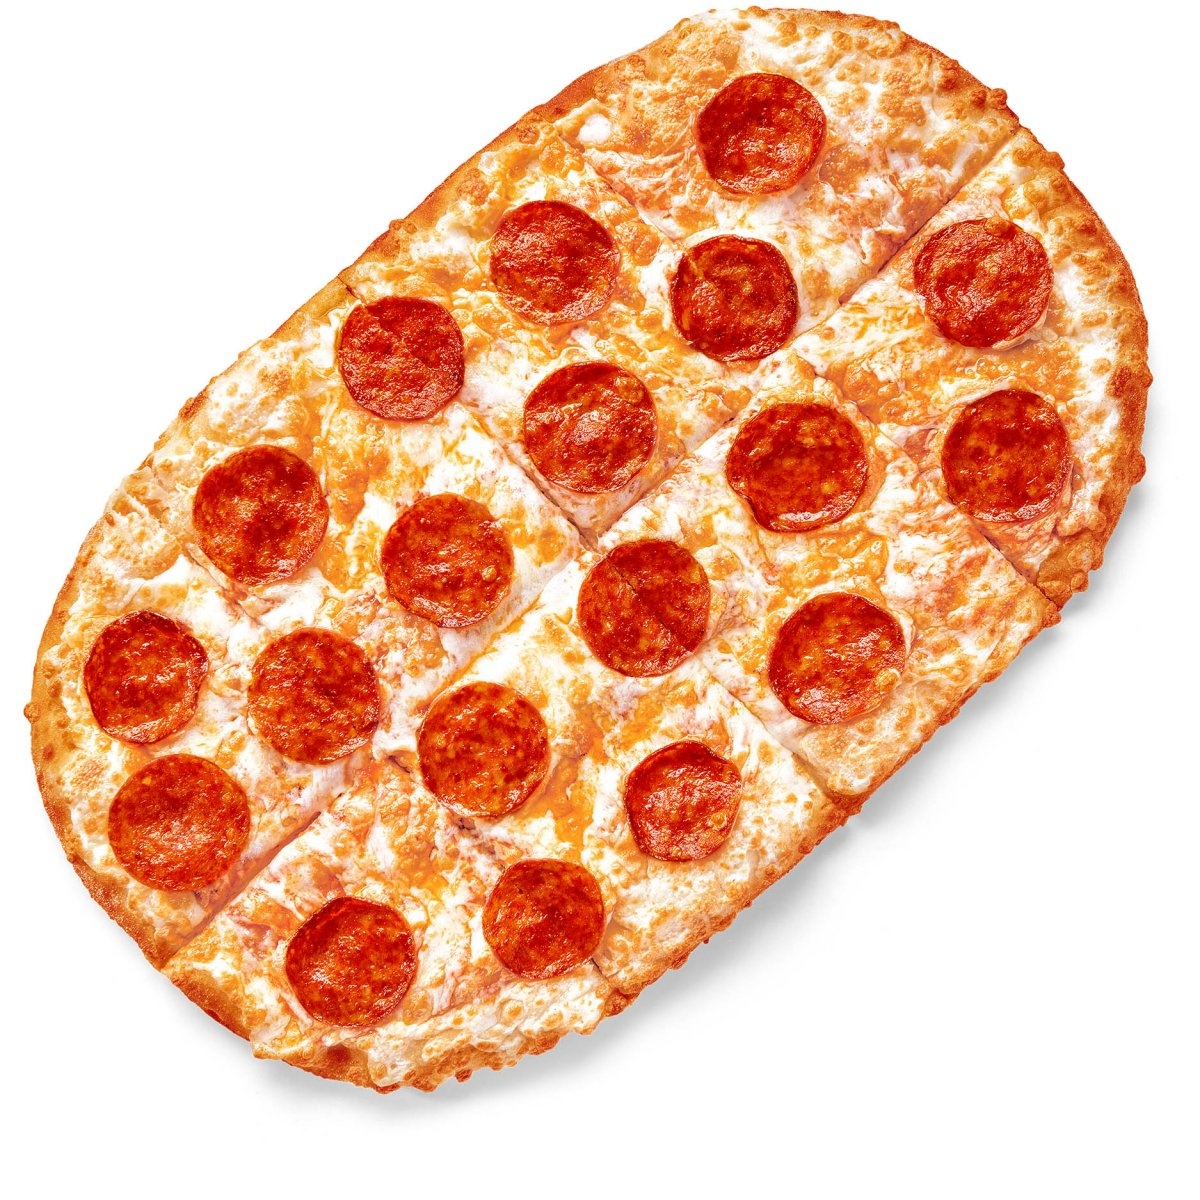 Римская пицца пепперони